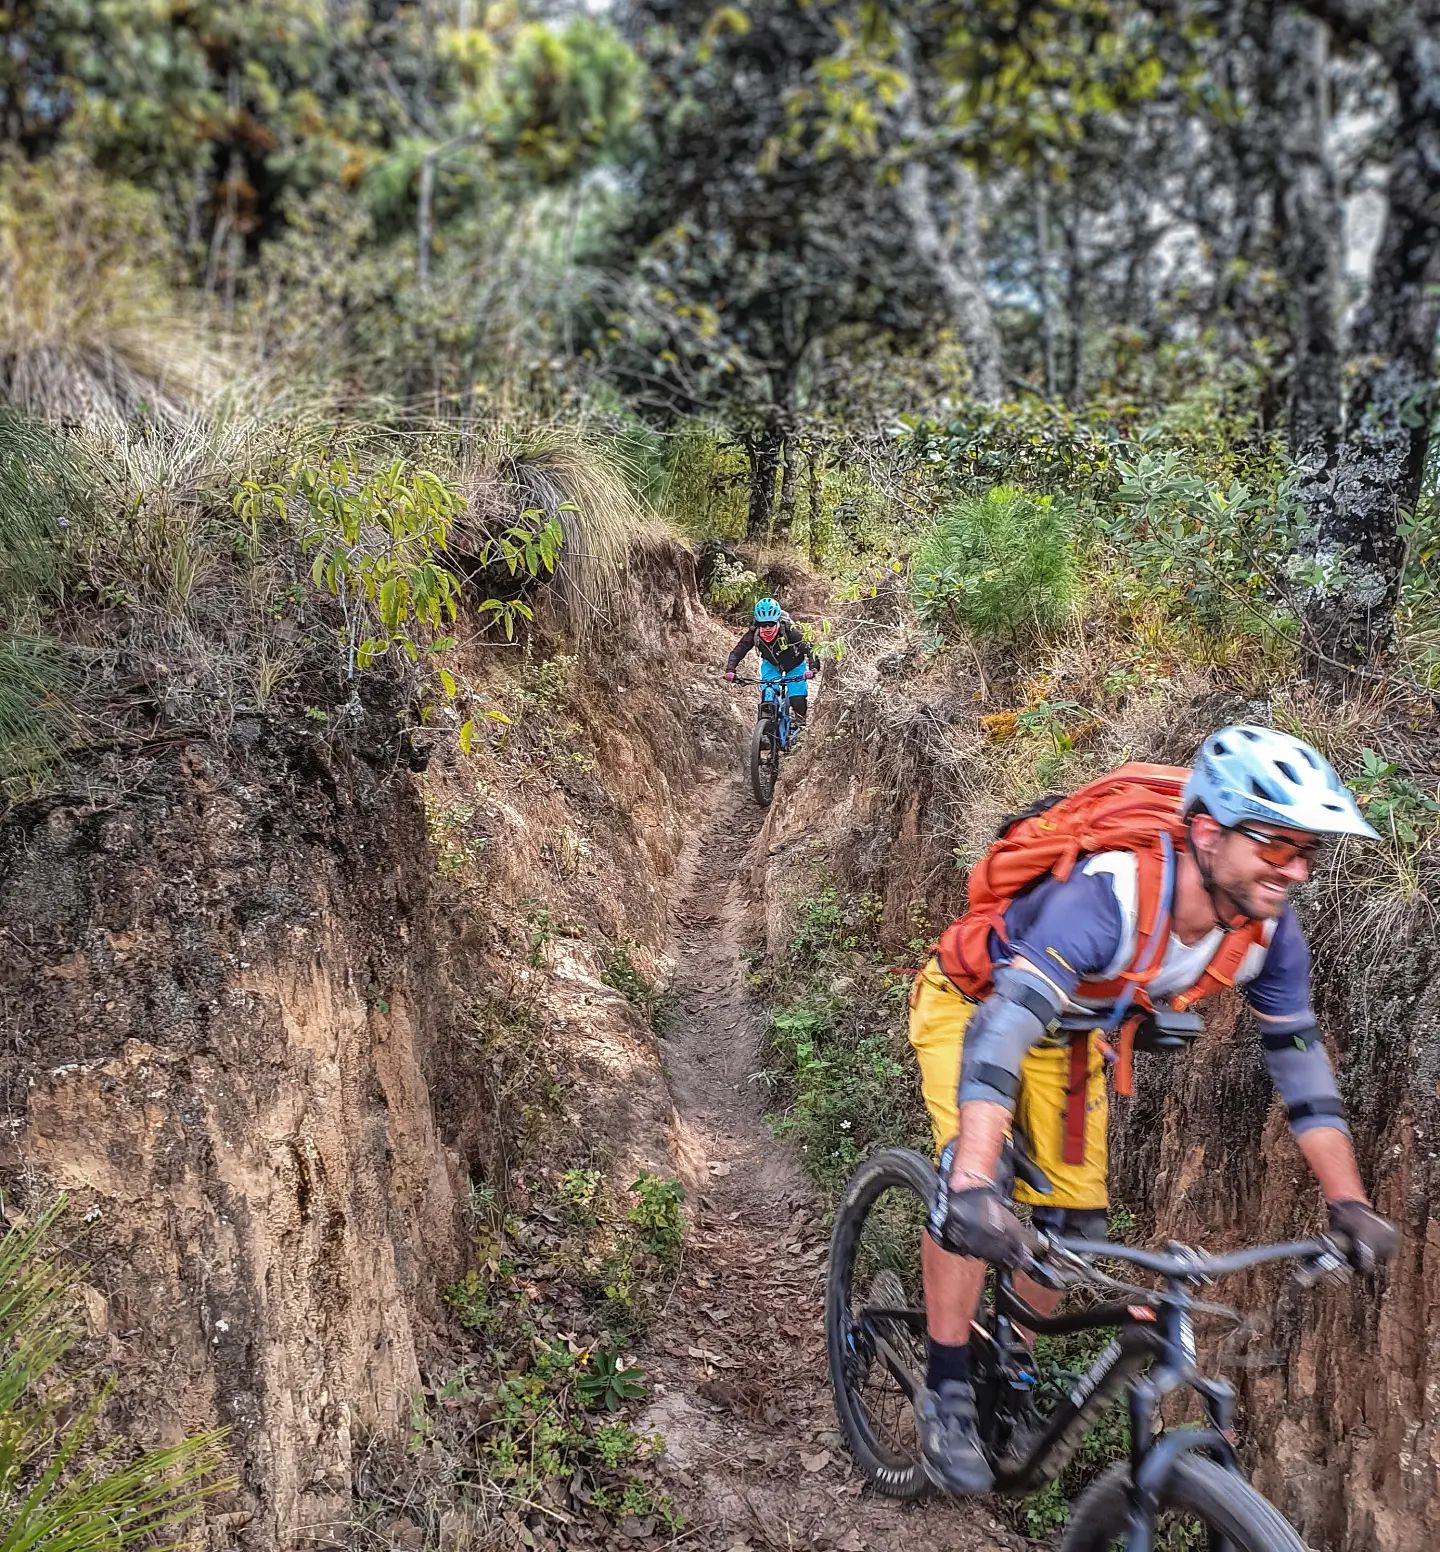 Tecpán trails 🇨🇭✌️
.
#mtbtravel #mtbtours #gorideyourbike #enduromtb #explore #downhillmtb #outside #freedomontwowheels #adventuretime #adventuremtb #bikelife #mtbguatemala #tecpanguatemala